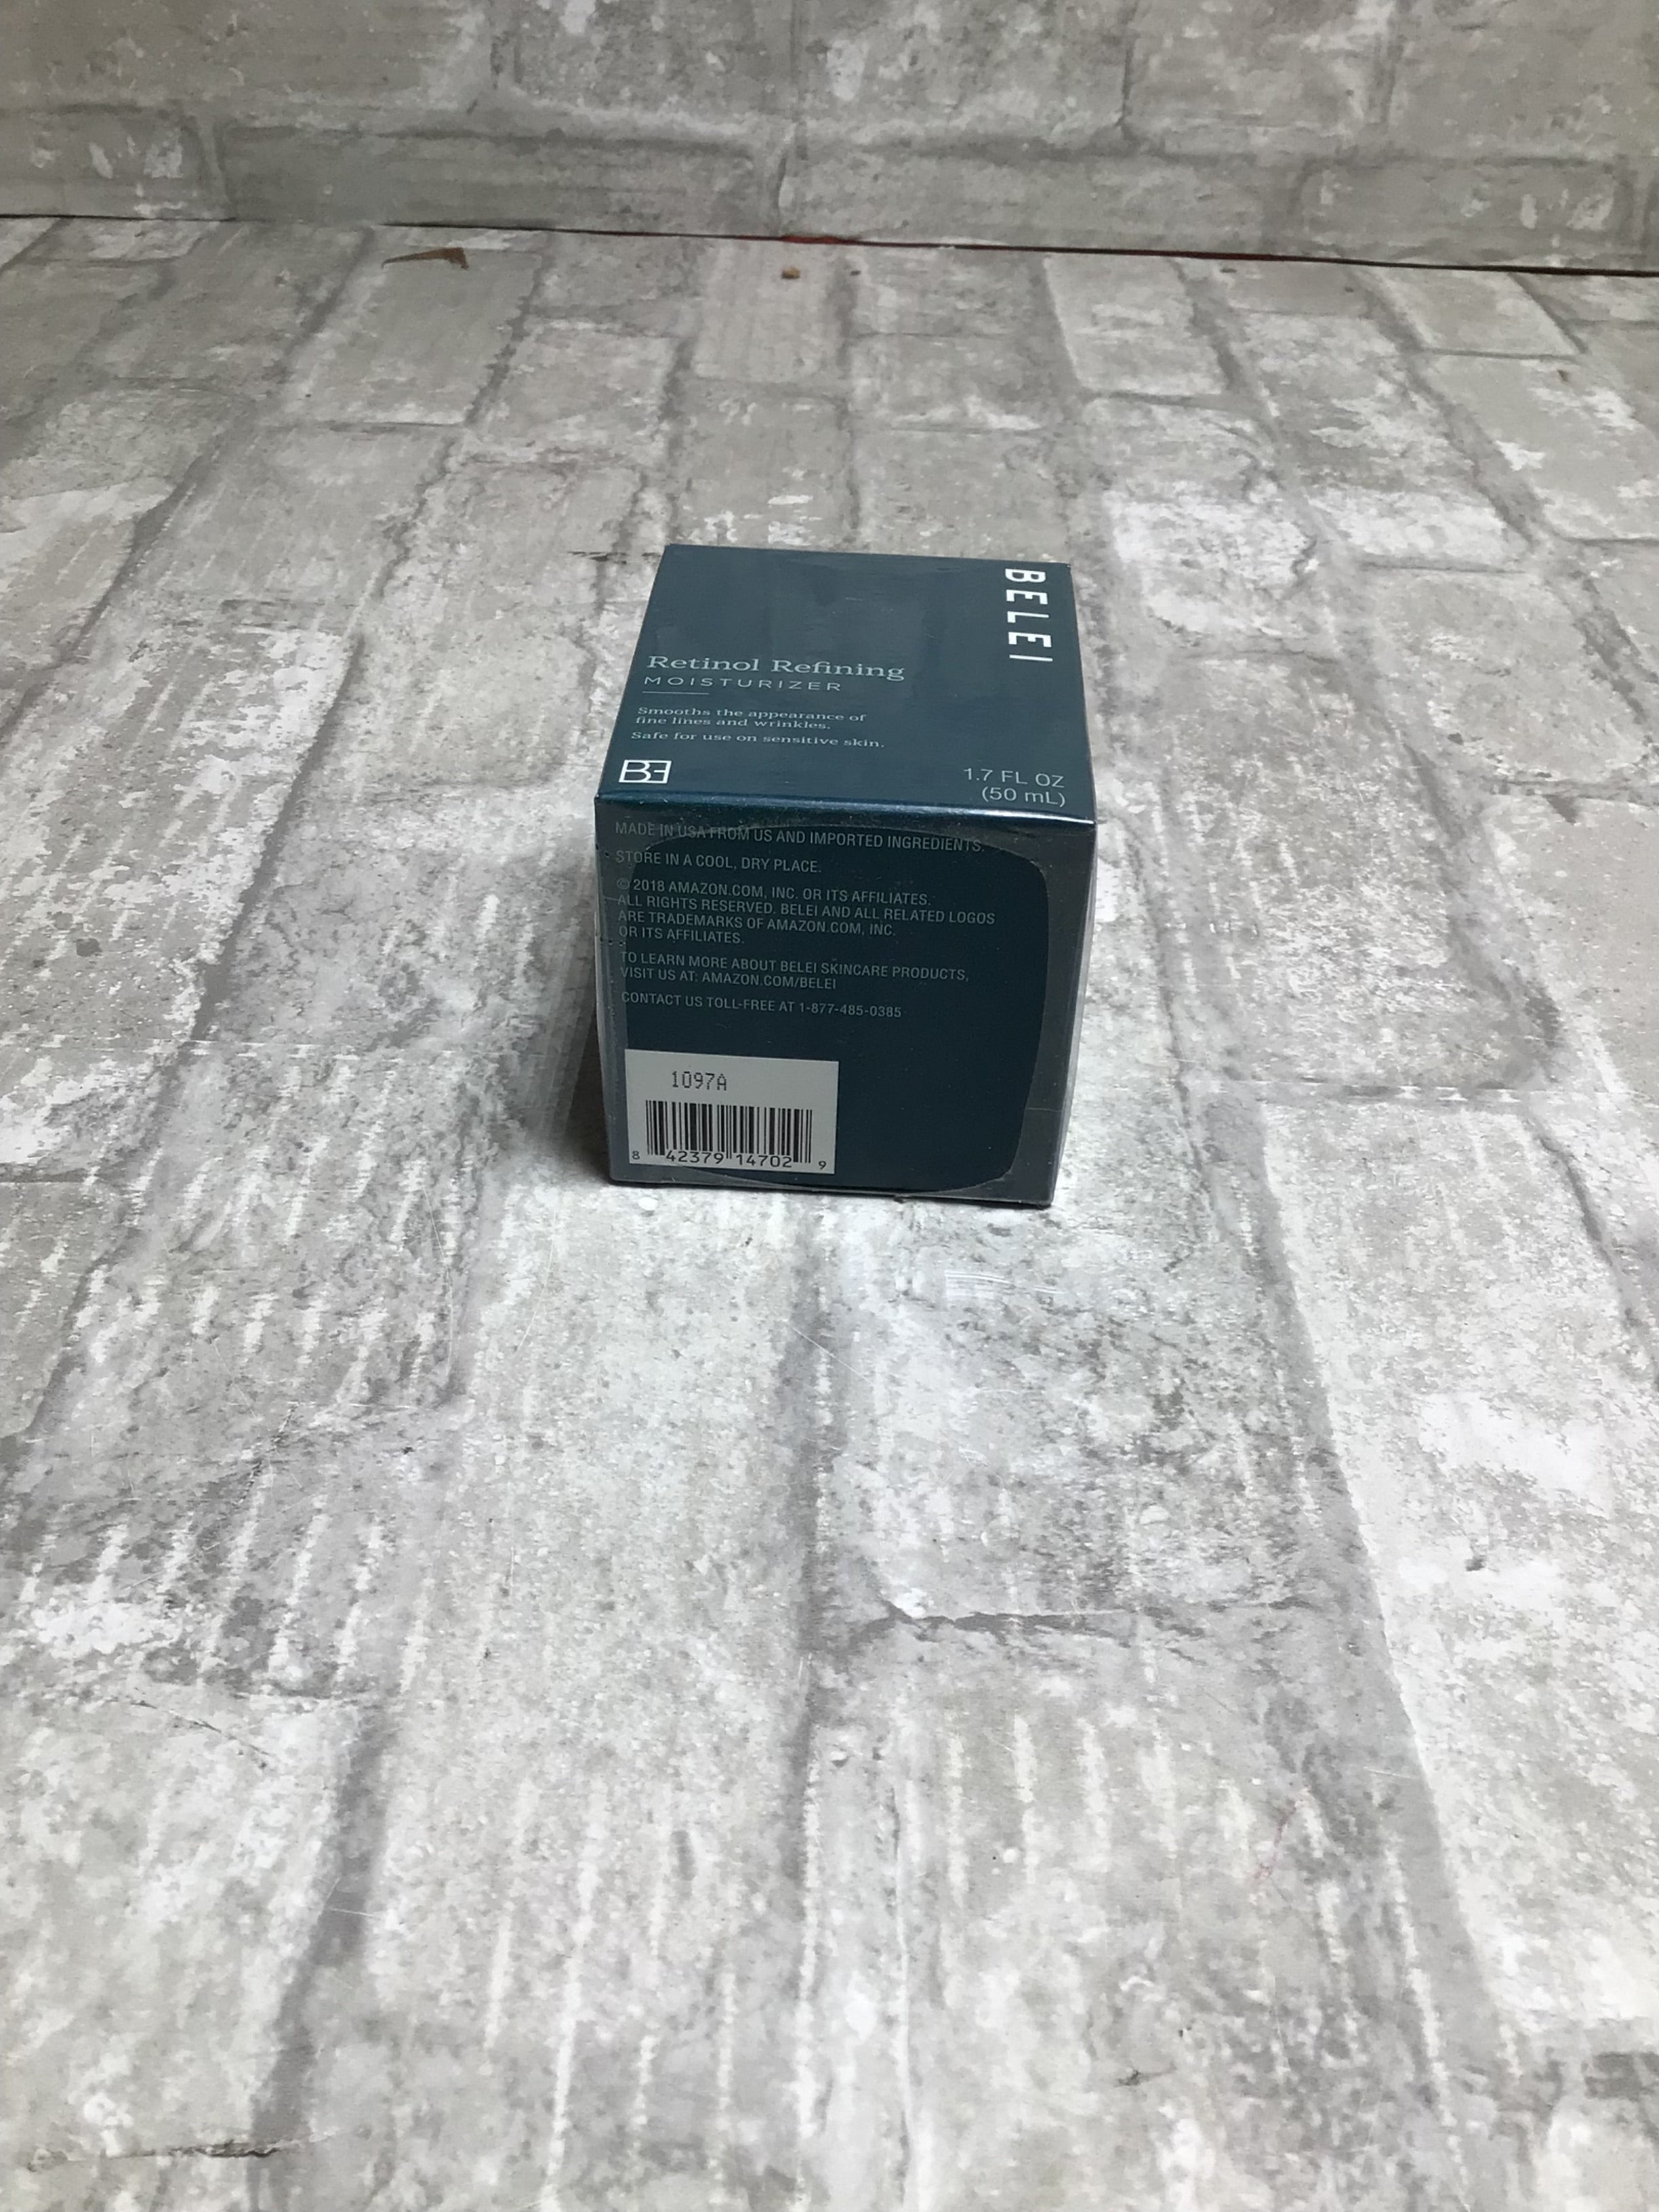 BELEI Retinol Refining Moisturizer - 1.7 oz - SEALED BOX (8222995513582)